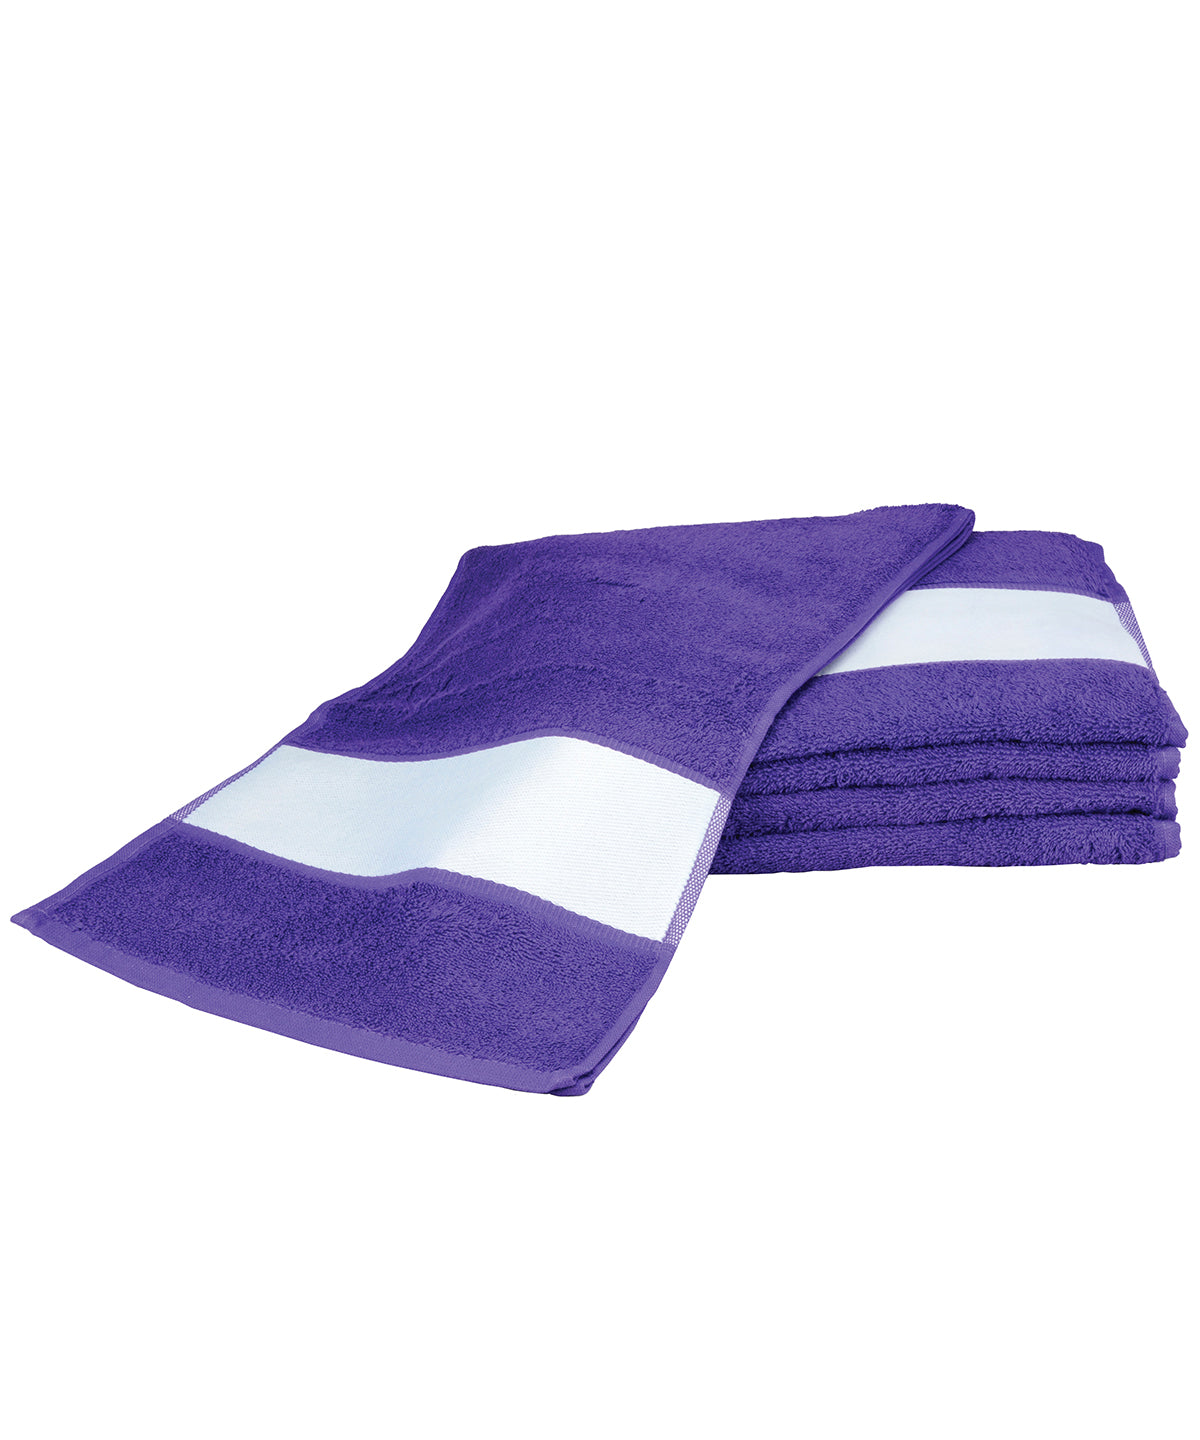 Personalised Towels - Mid Purple A&R Towels ARTG® SUBLI-Me® sport towel